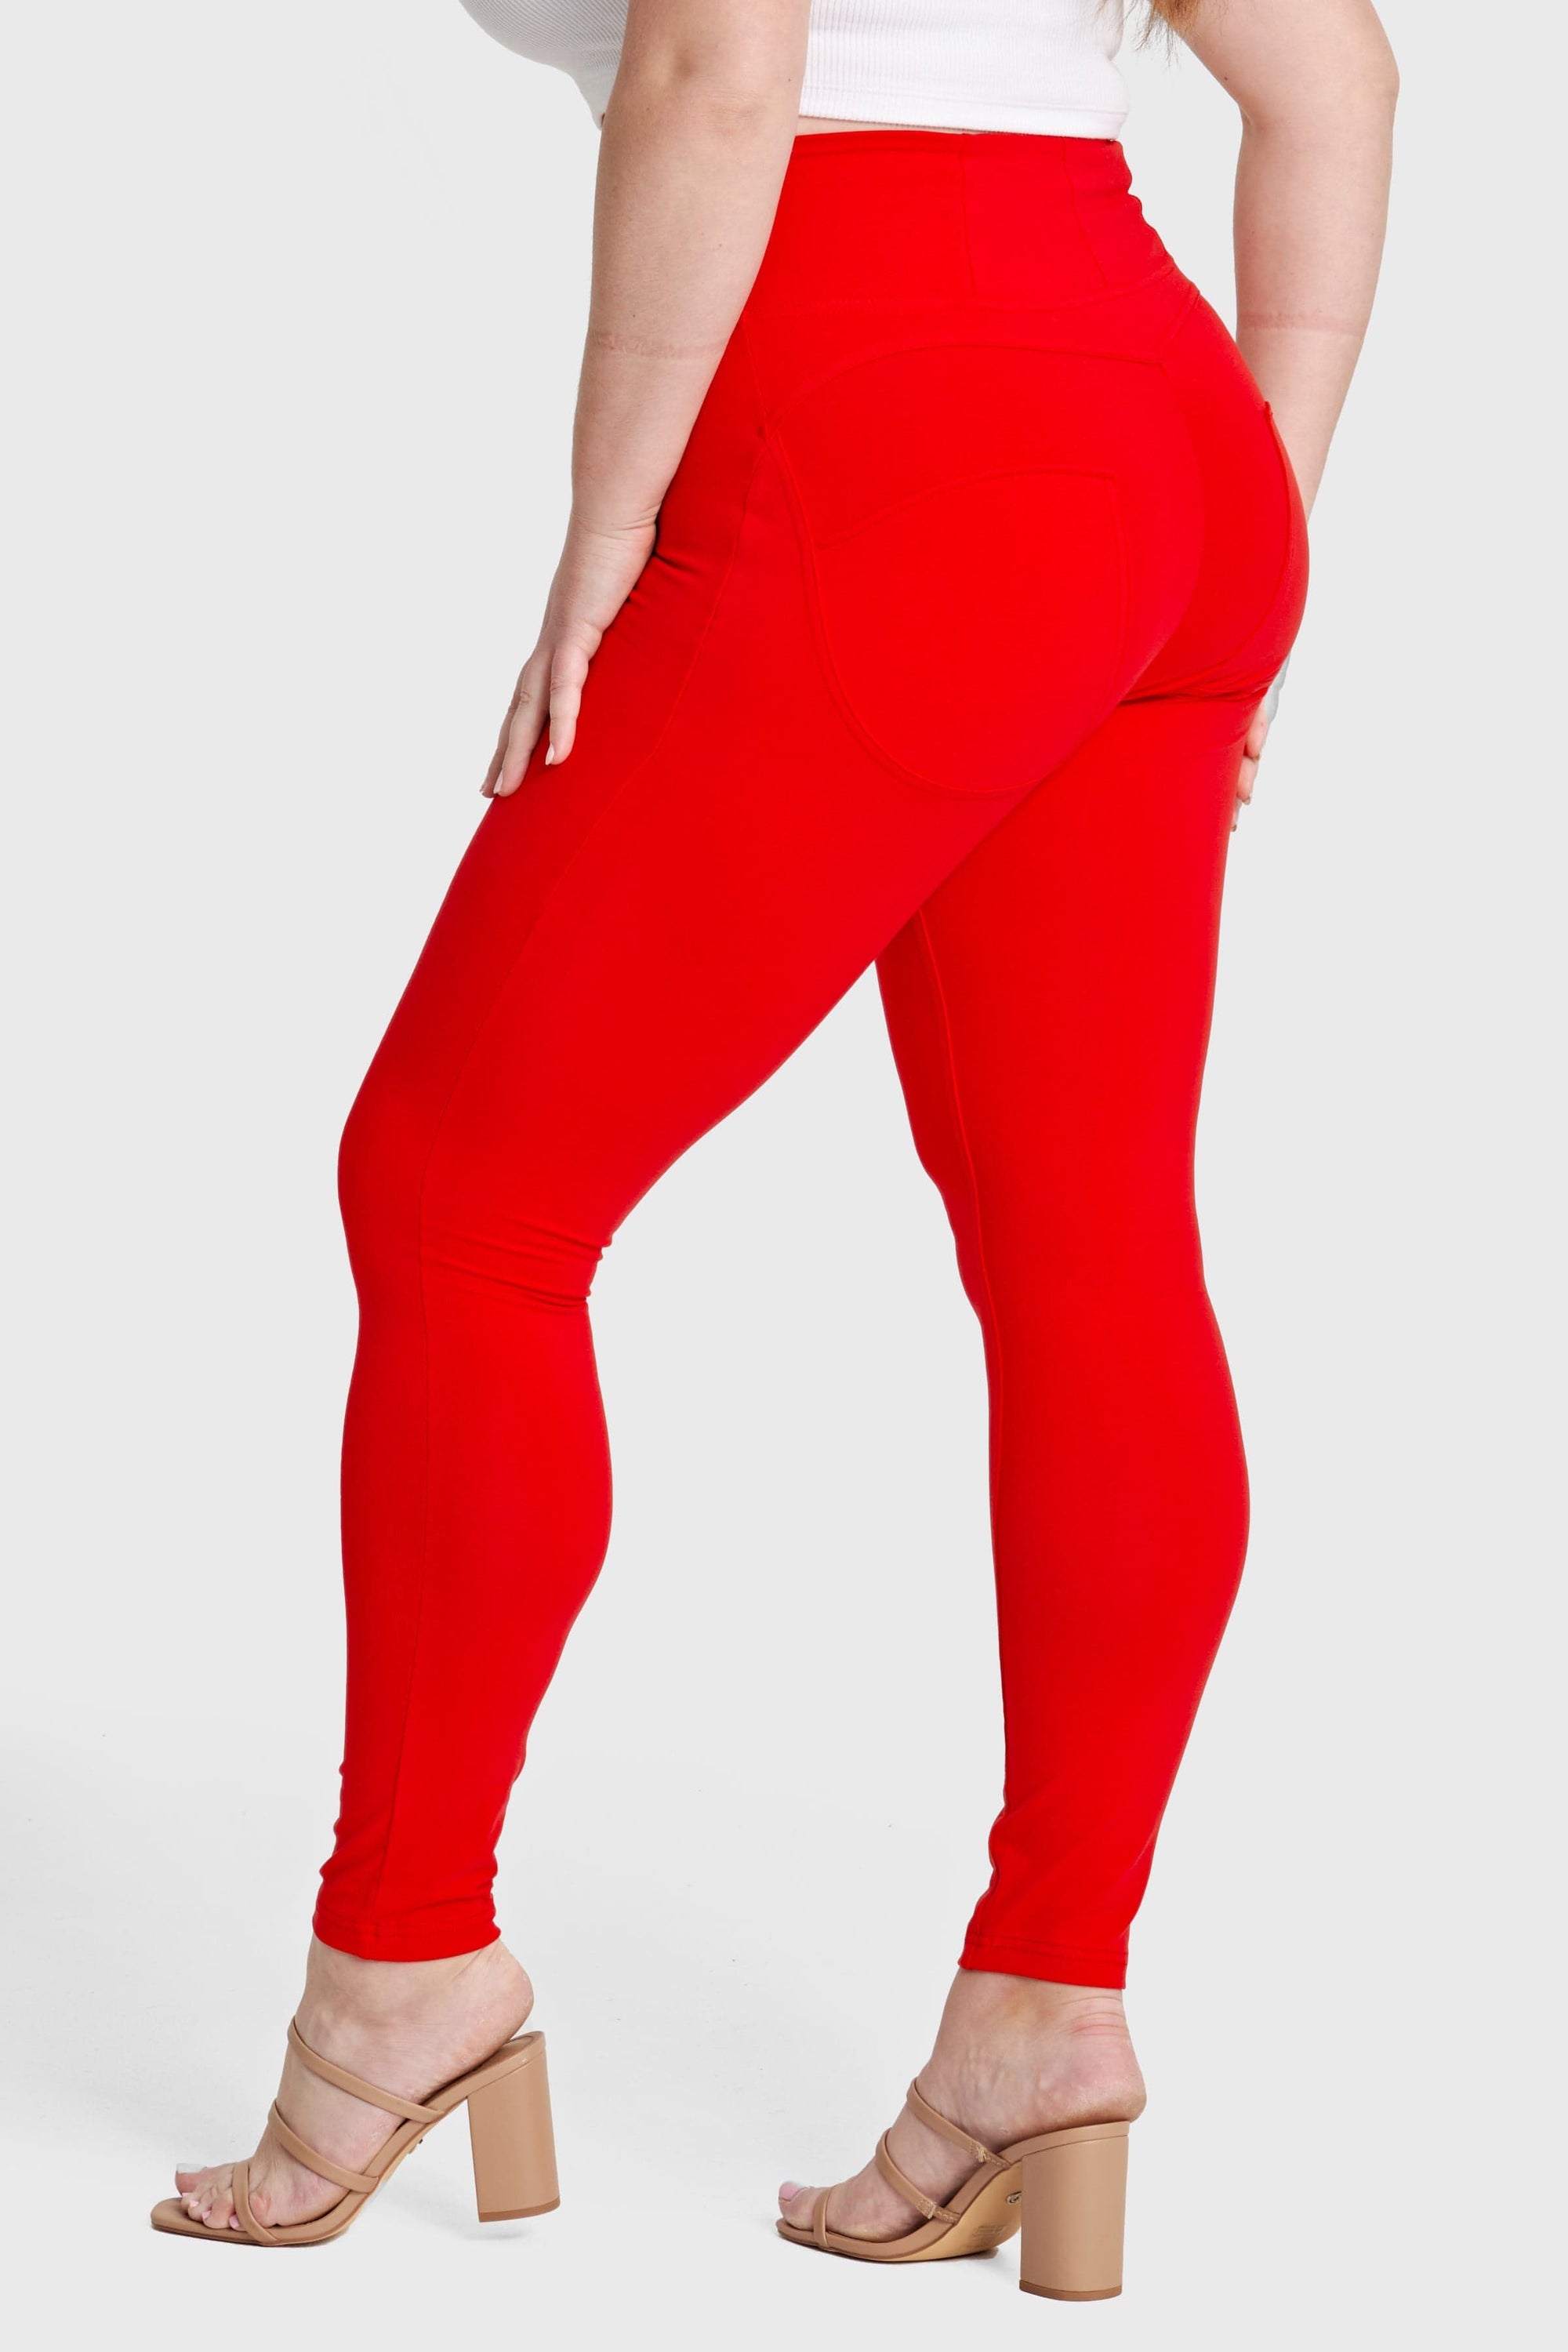 WR.UP® Curvy Fashion - Cintura alta con cremallera - Largo completo - Rojo 5